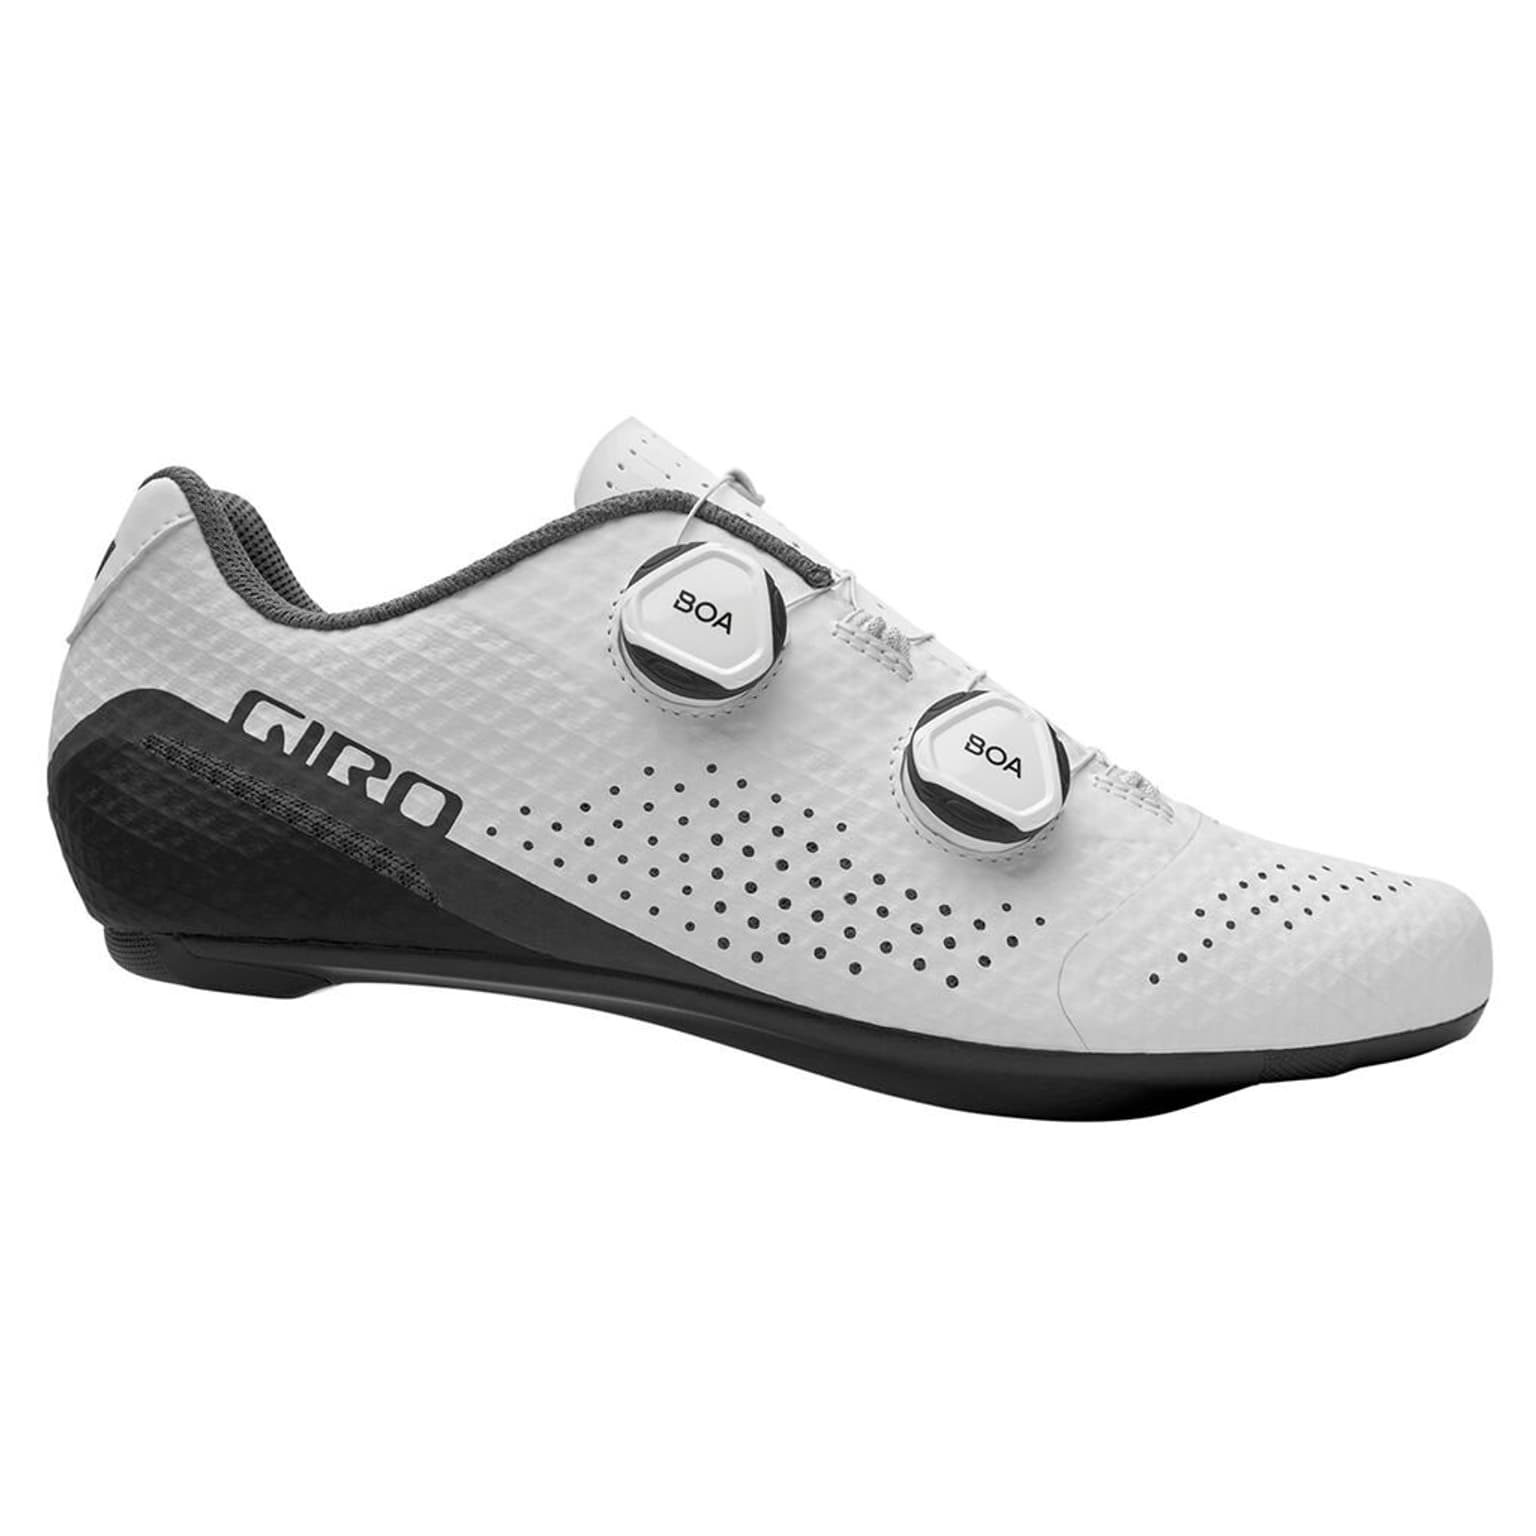 Giro Giro Regime W Shoe Veloschuhe blanc 1